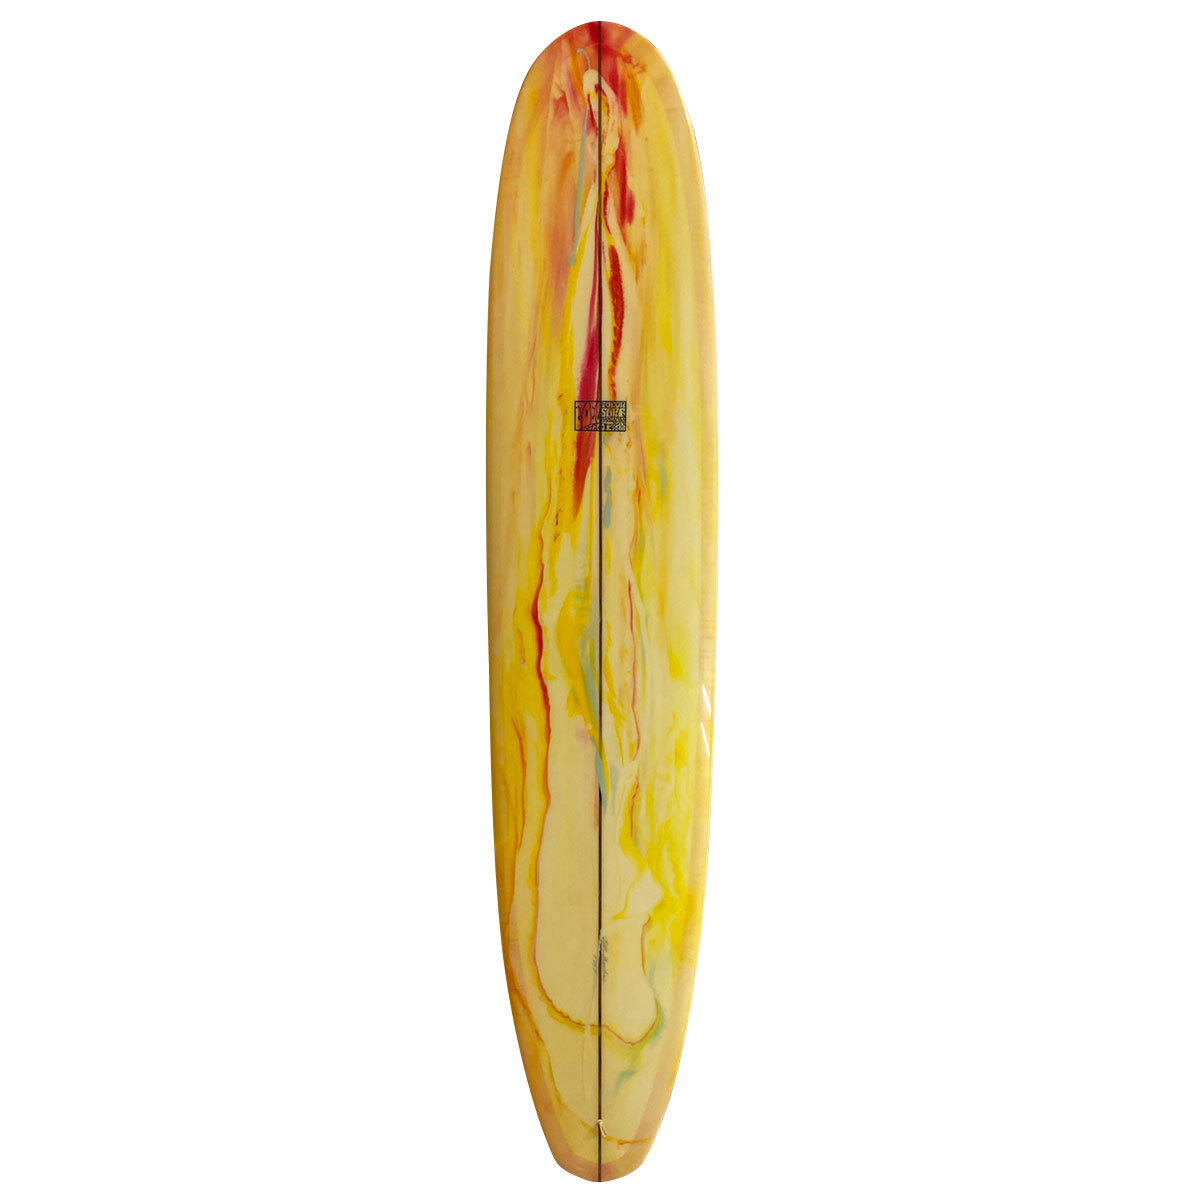 JOEL TUDOR SURFBOAD / JOEL TUDOR / DIAMOND TAIL 9`0 Shaped by BILL SHROSBEE